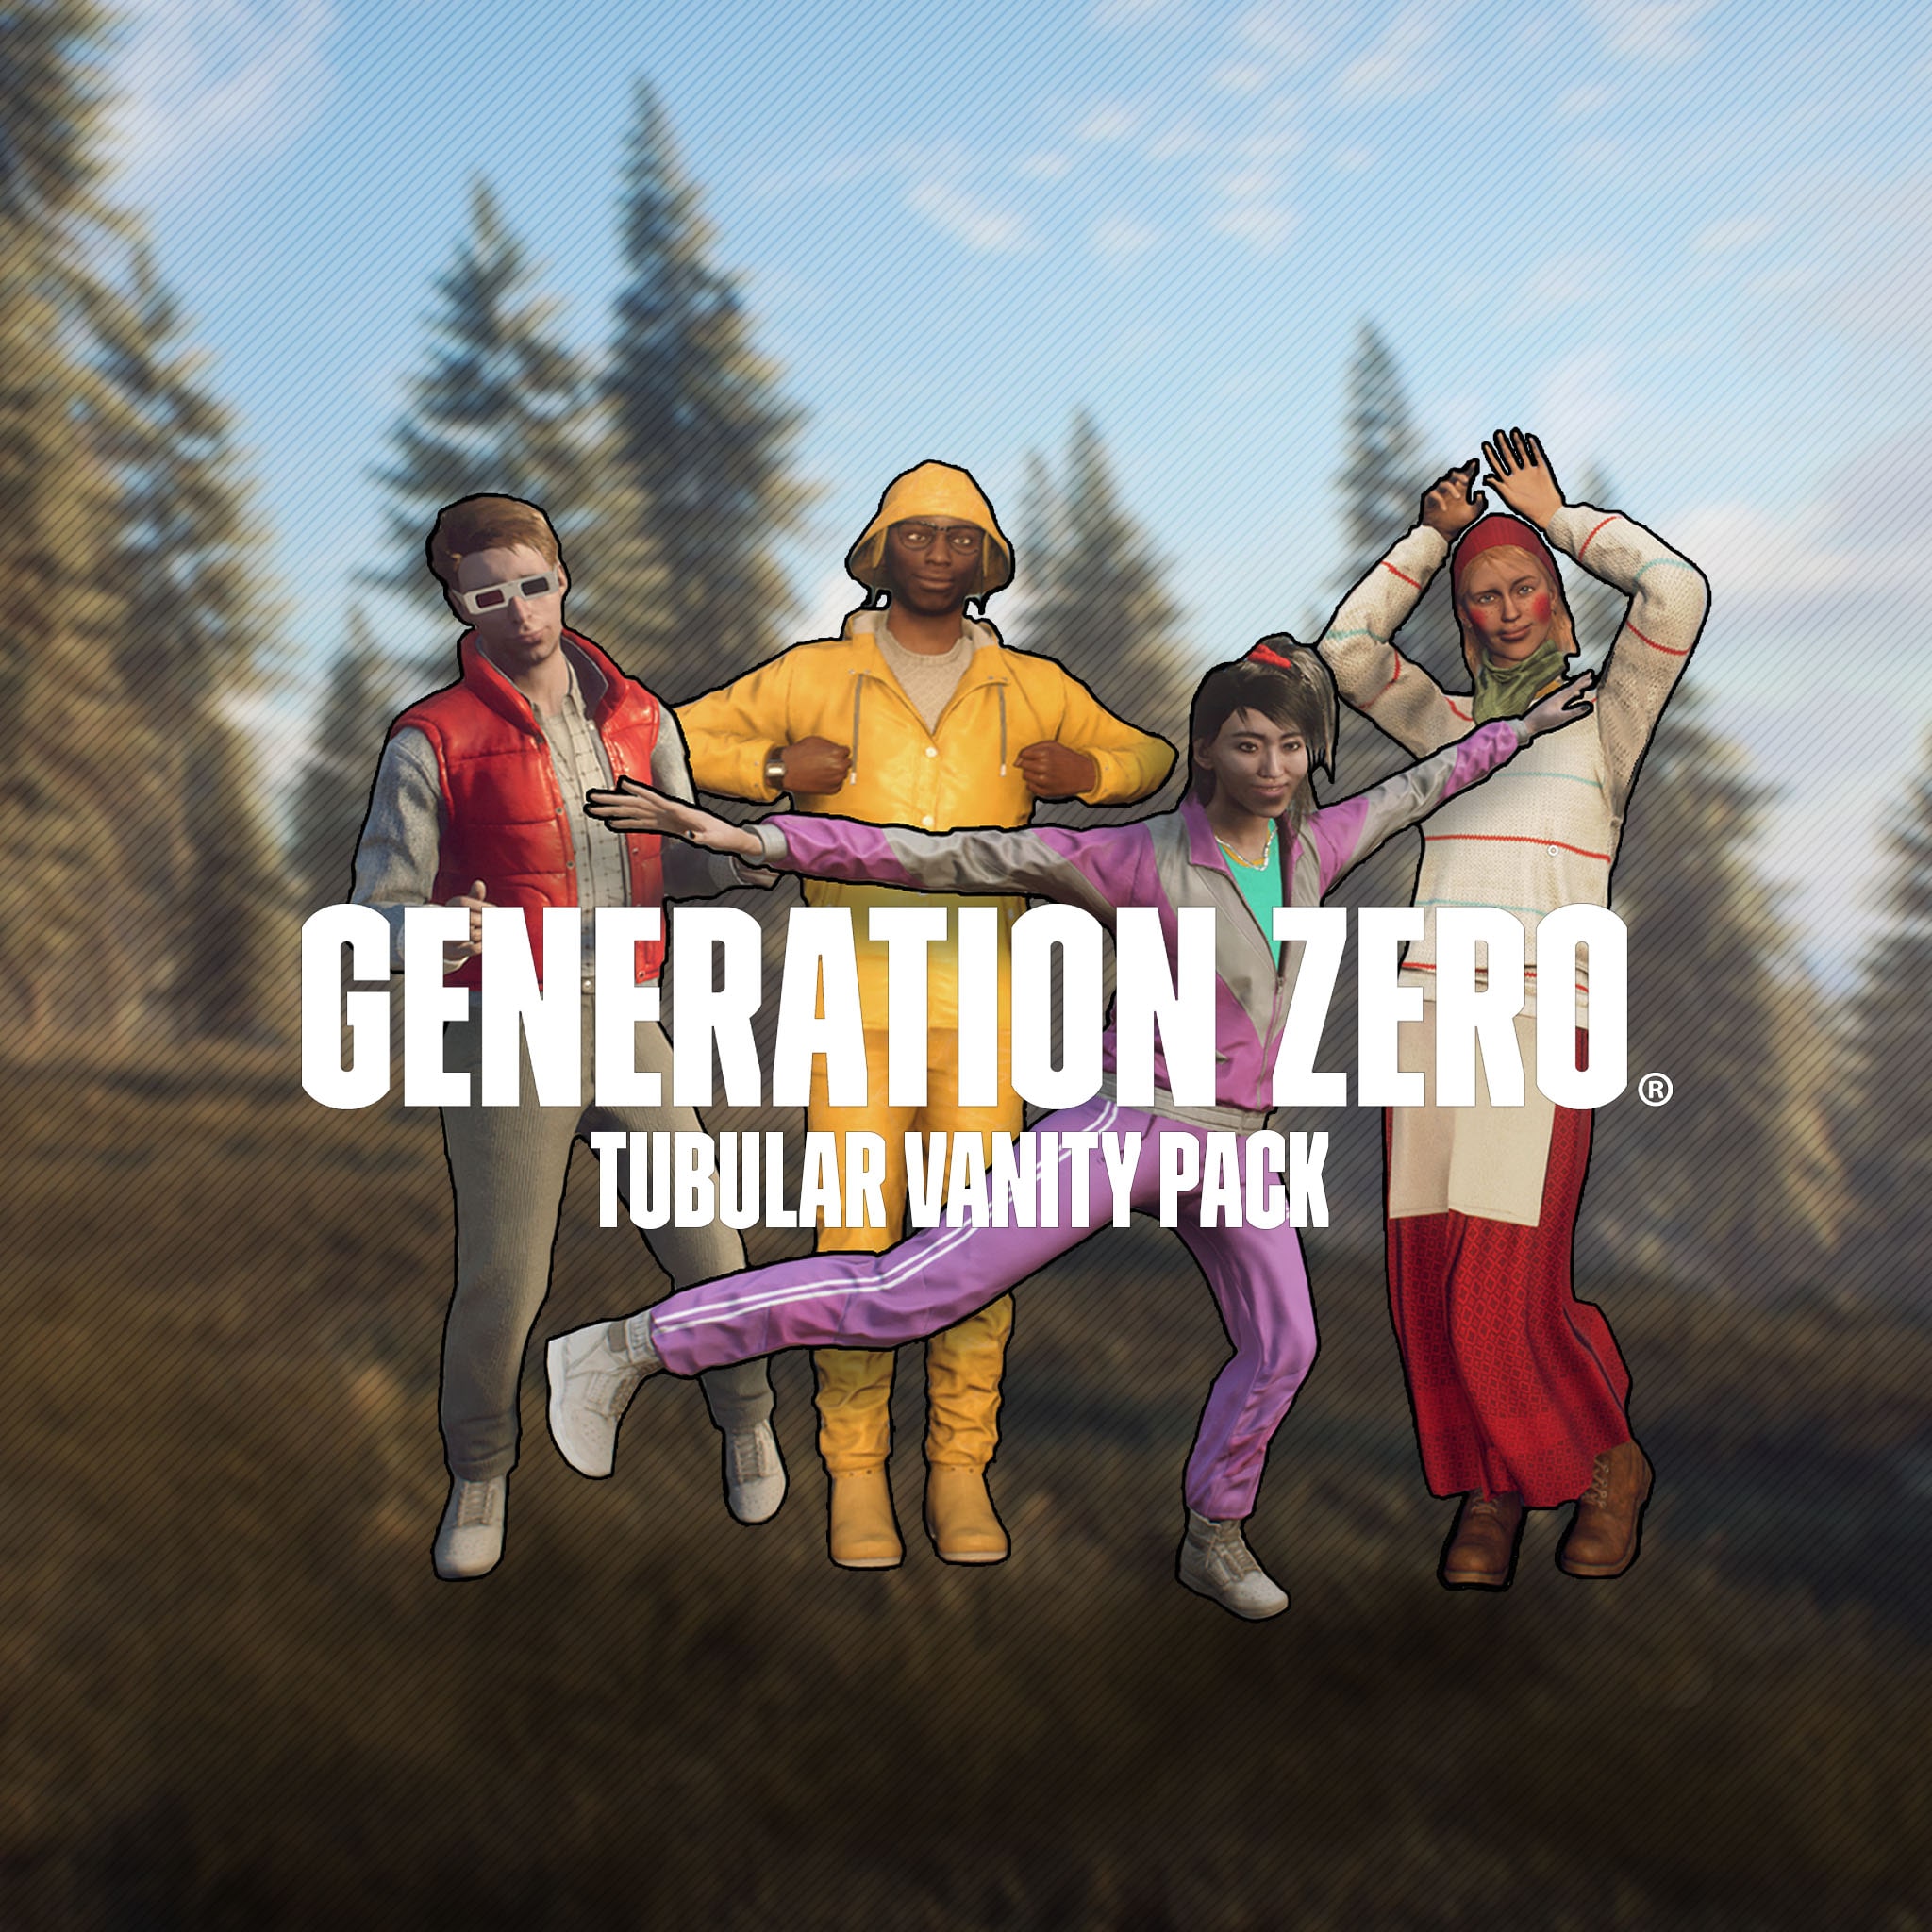 Generation Zero® - Tubular Vanity Pack (English/Chinese/Korean/Japanese Ver.)